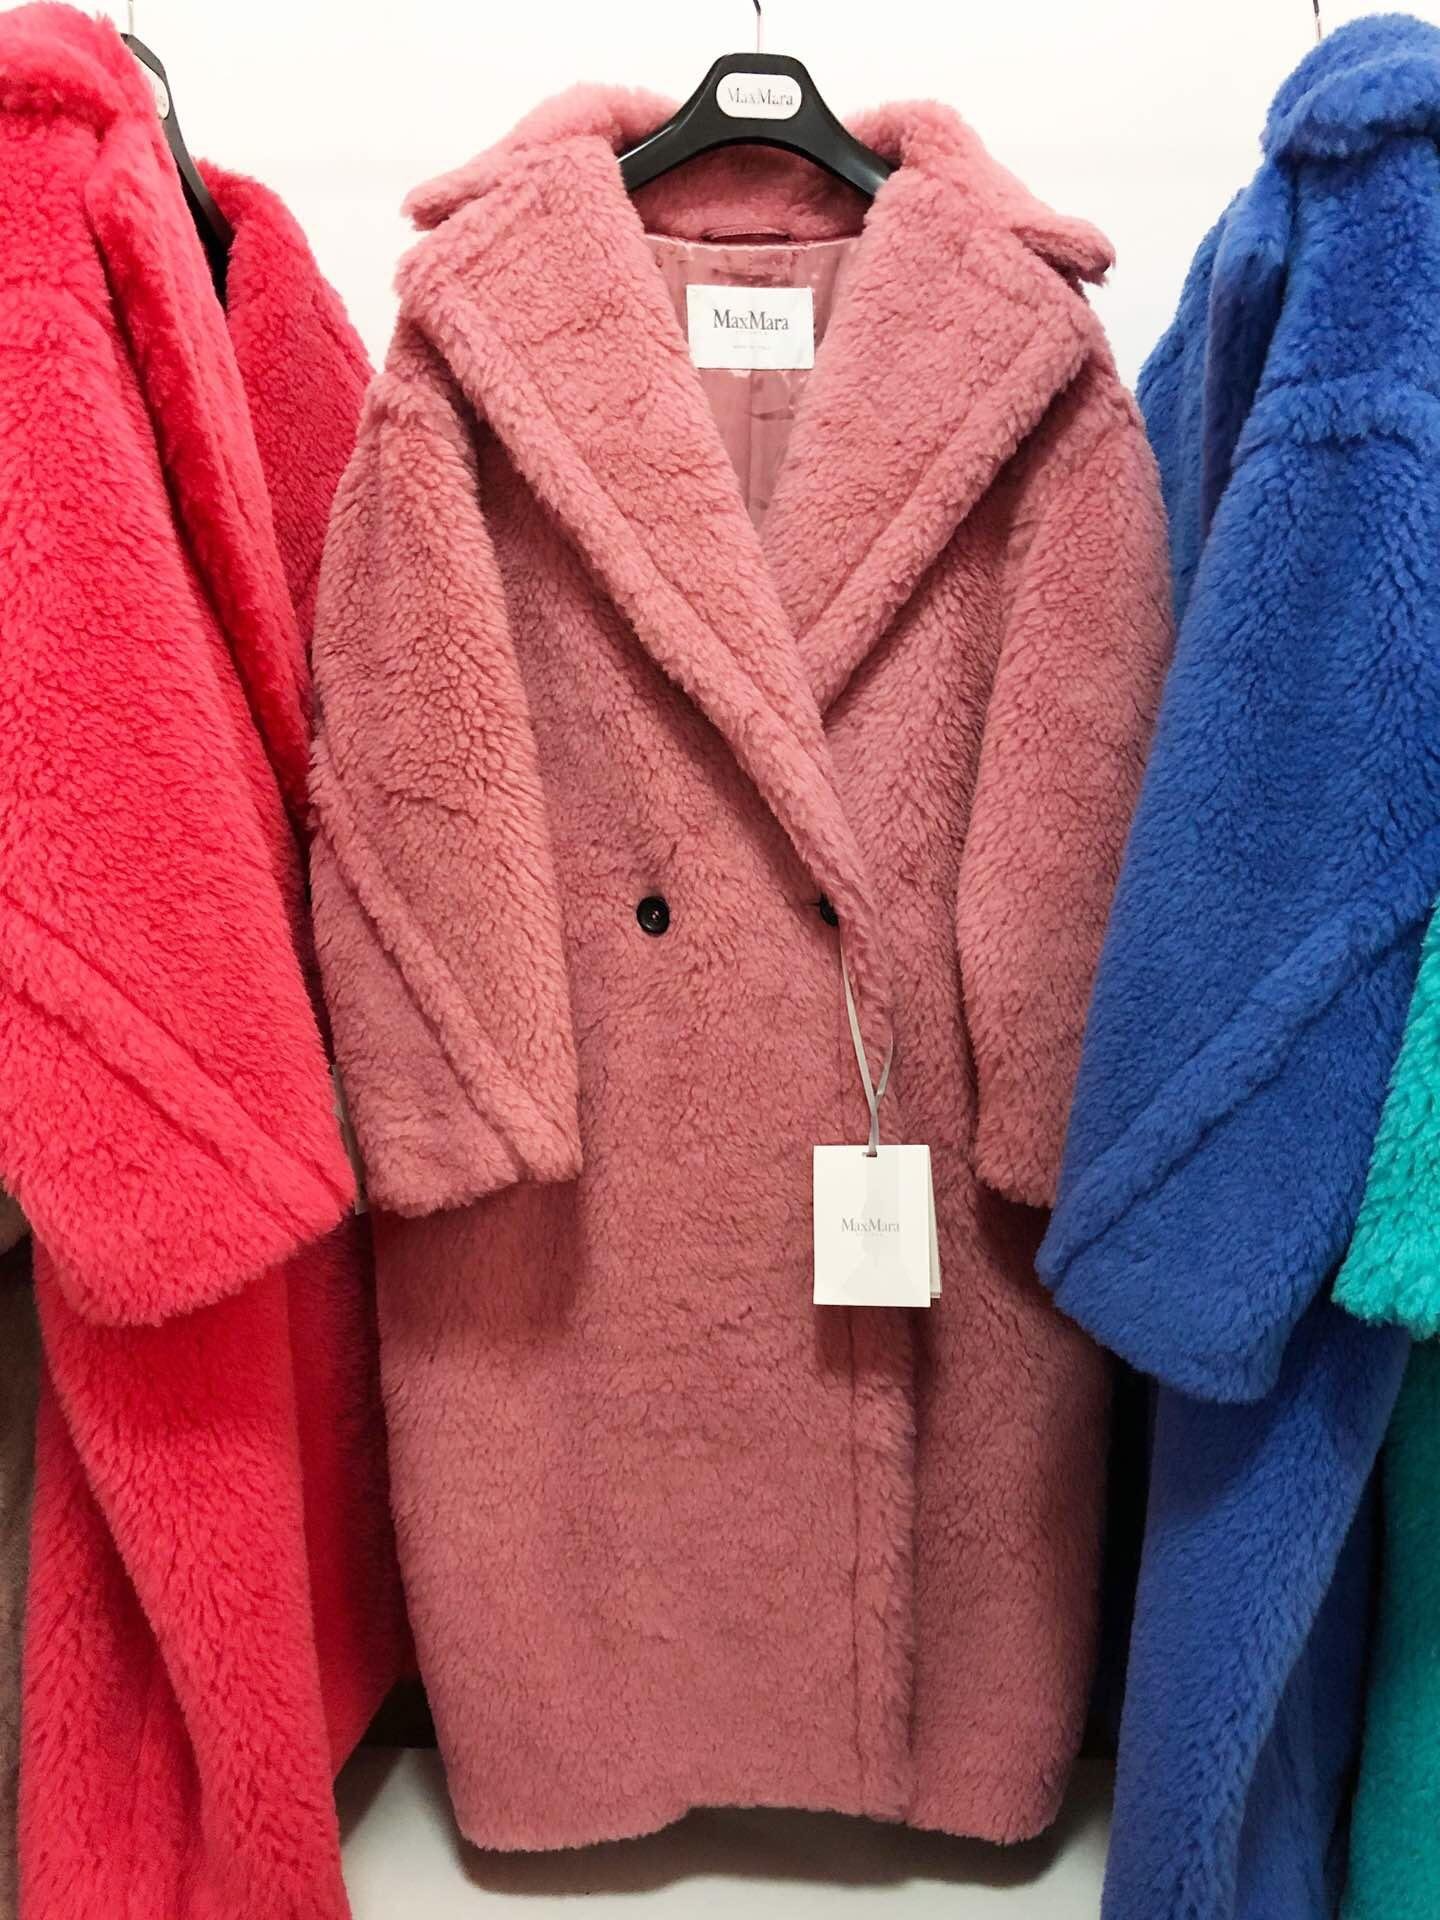 Cheap Teddy Bear Coat Max Mara Style discount Max Mara Teddy Bear Coat  Price (China Trading Company) - Down & Winter Apparel - Apparel &